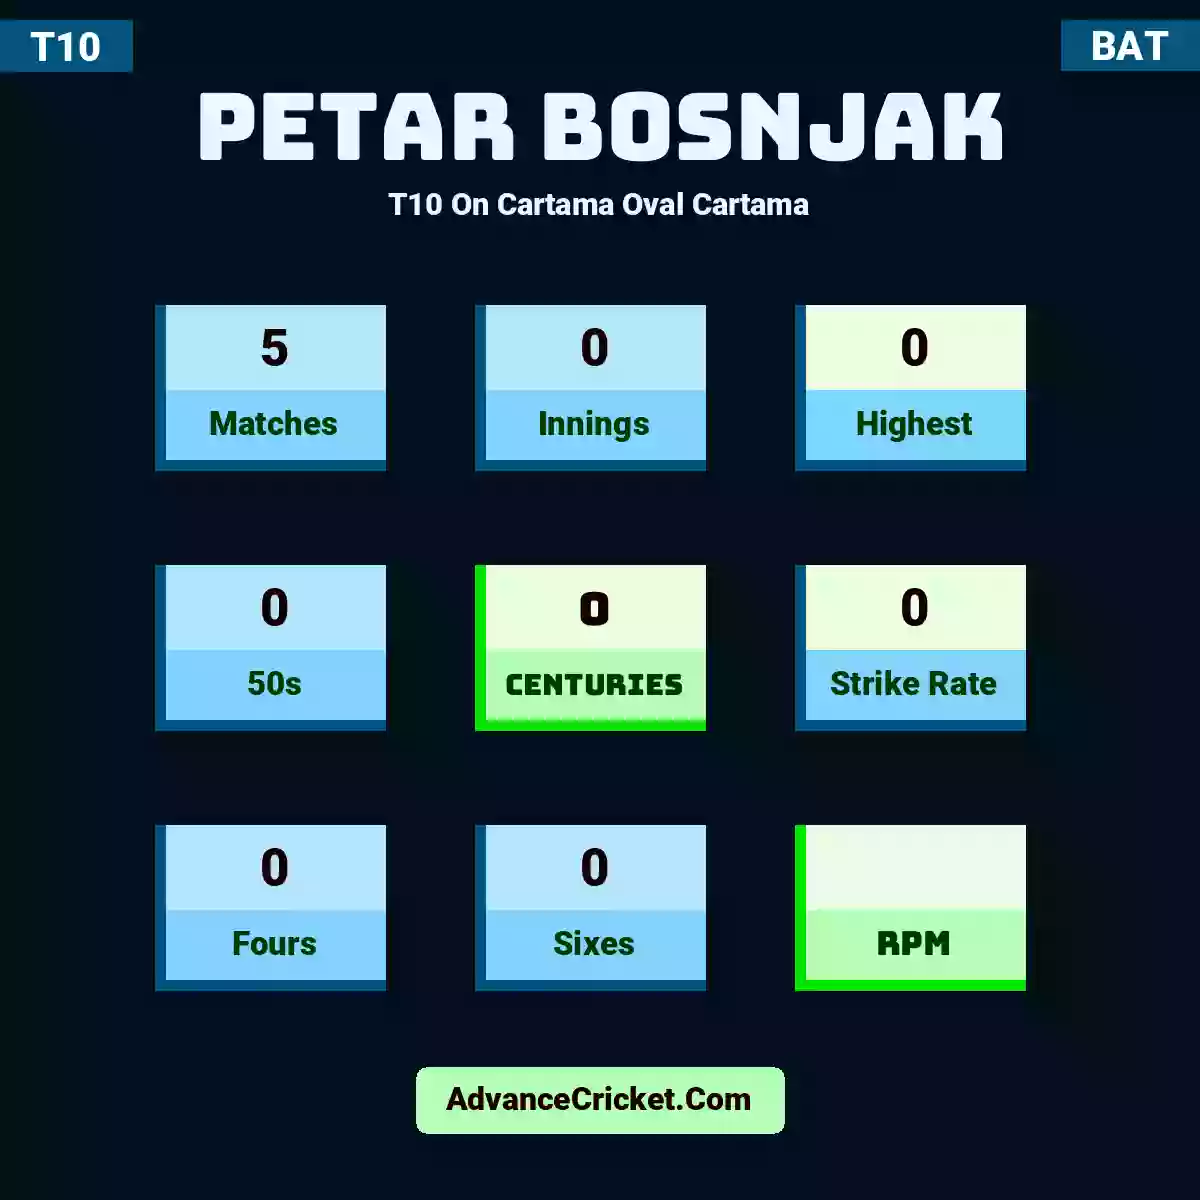 Petar Bosnjak T10  On Cartama Oval Cartama, Petar Bosnjak played 5 matches, scored 0 runs as highest, 0 half-centuries, and 0 centuries, with a strike rate of 0. P.Bosnjak hit 0 fours and 0 sixes.